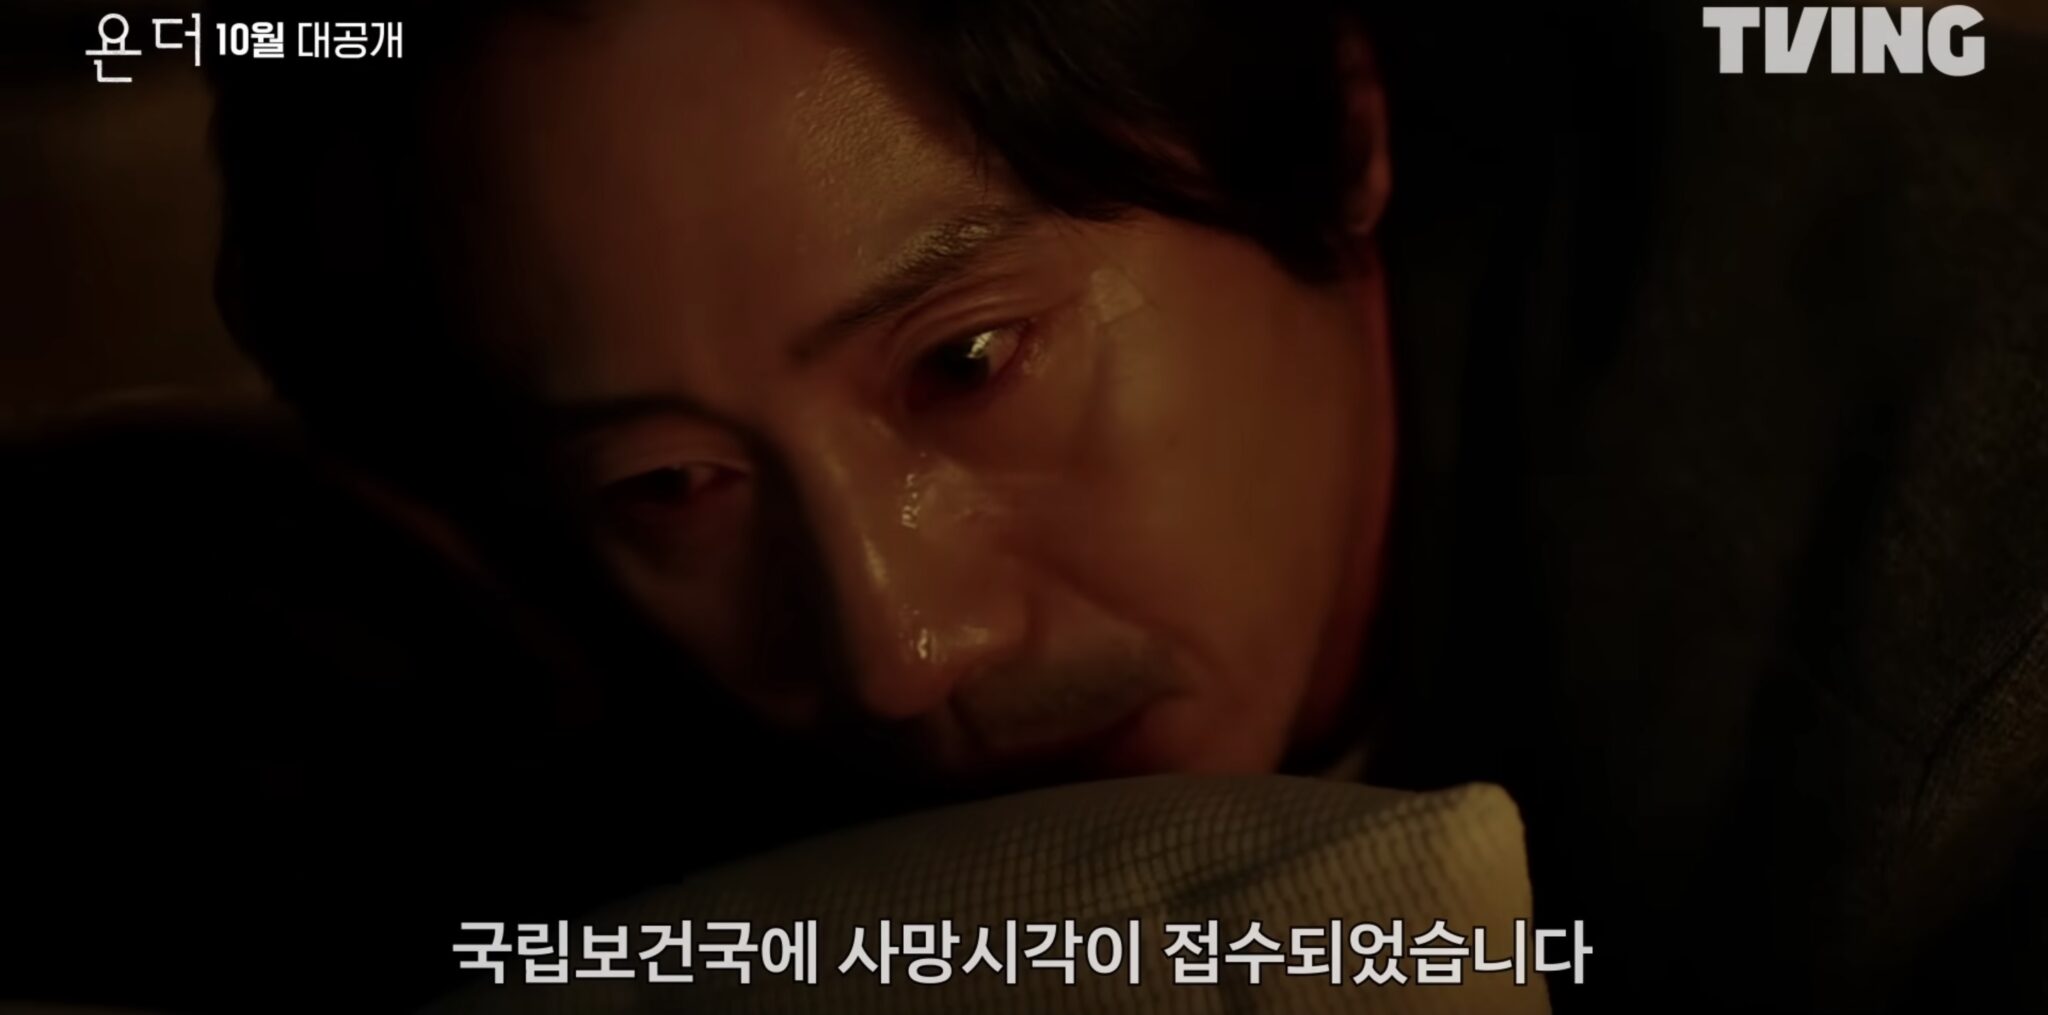 Shin Ha-kyun visits his resurrected wife in sci-fi drama Yonder